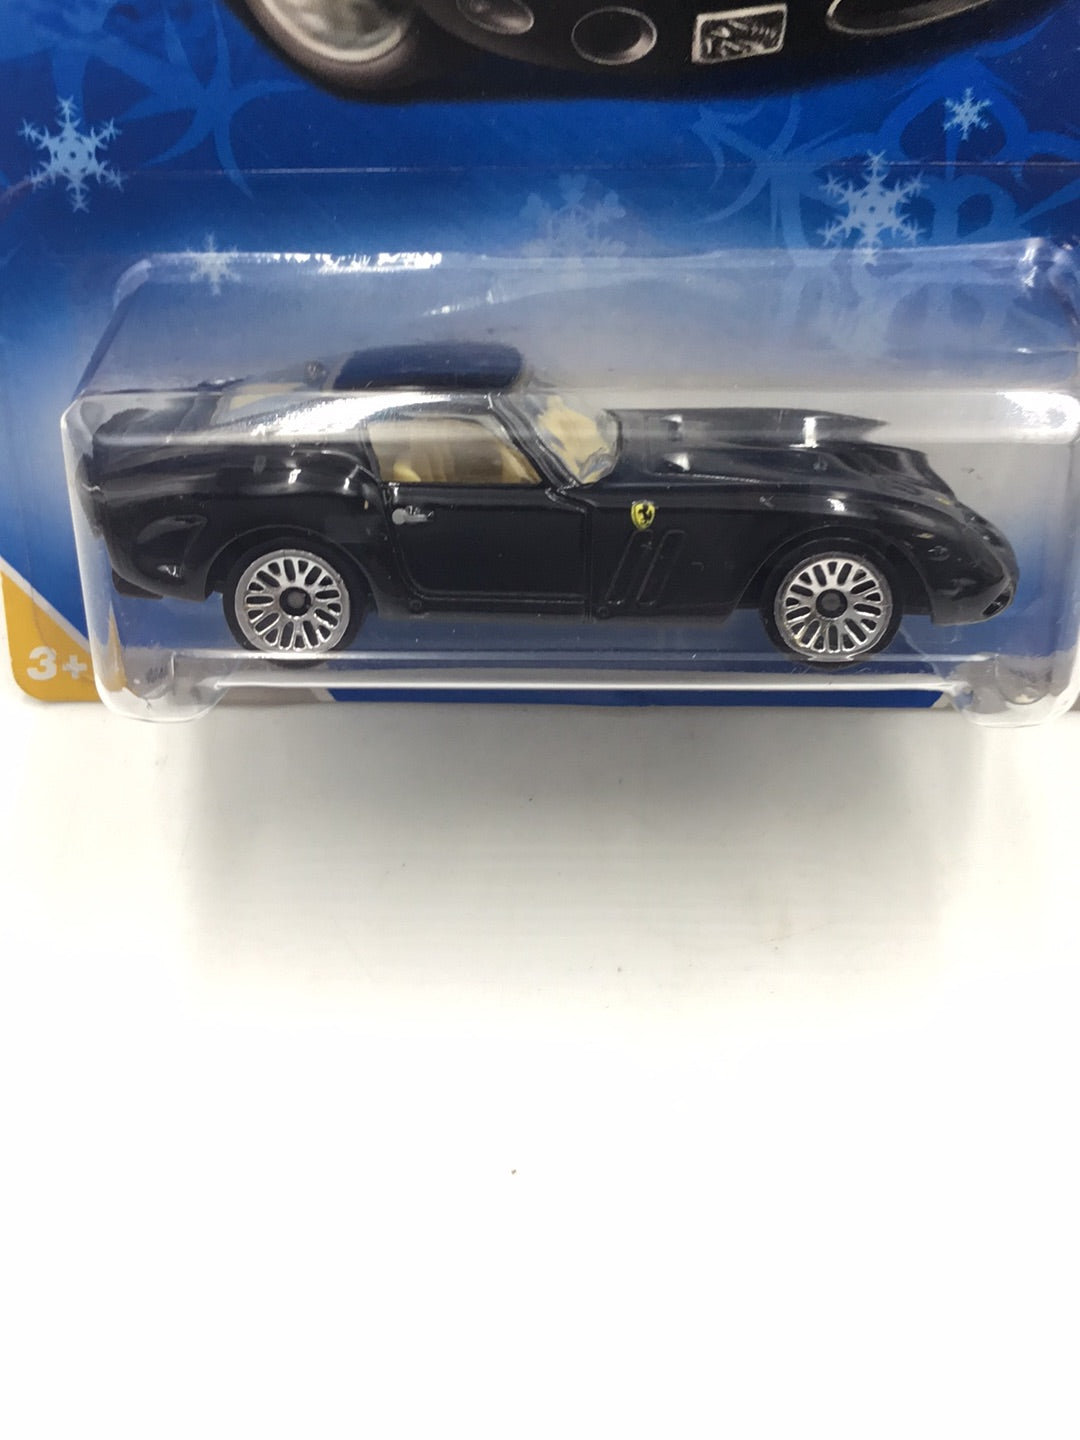 2009 Hot Wheels Target snowflake card #5 Ferrari 250 GTO with protector